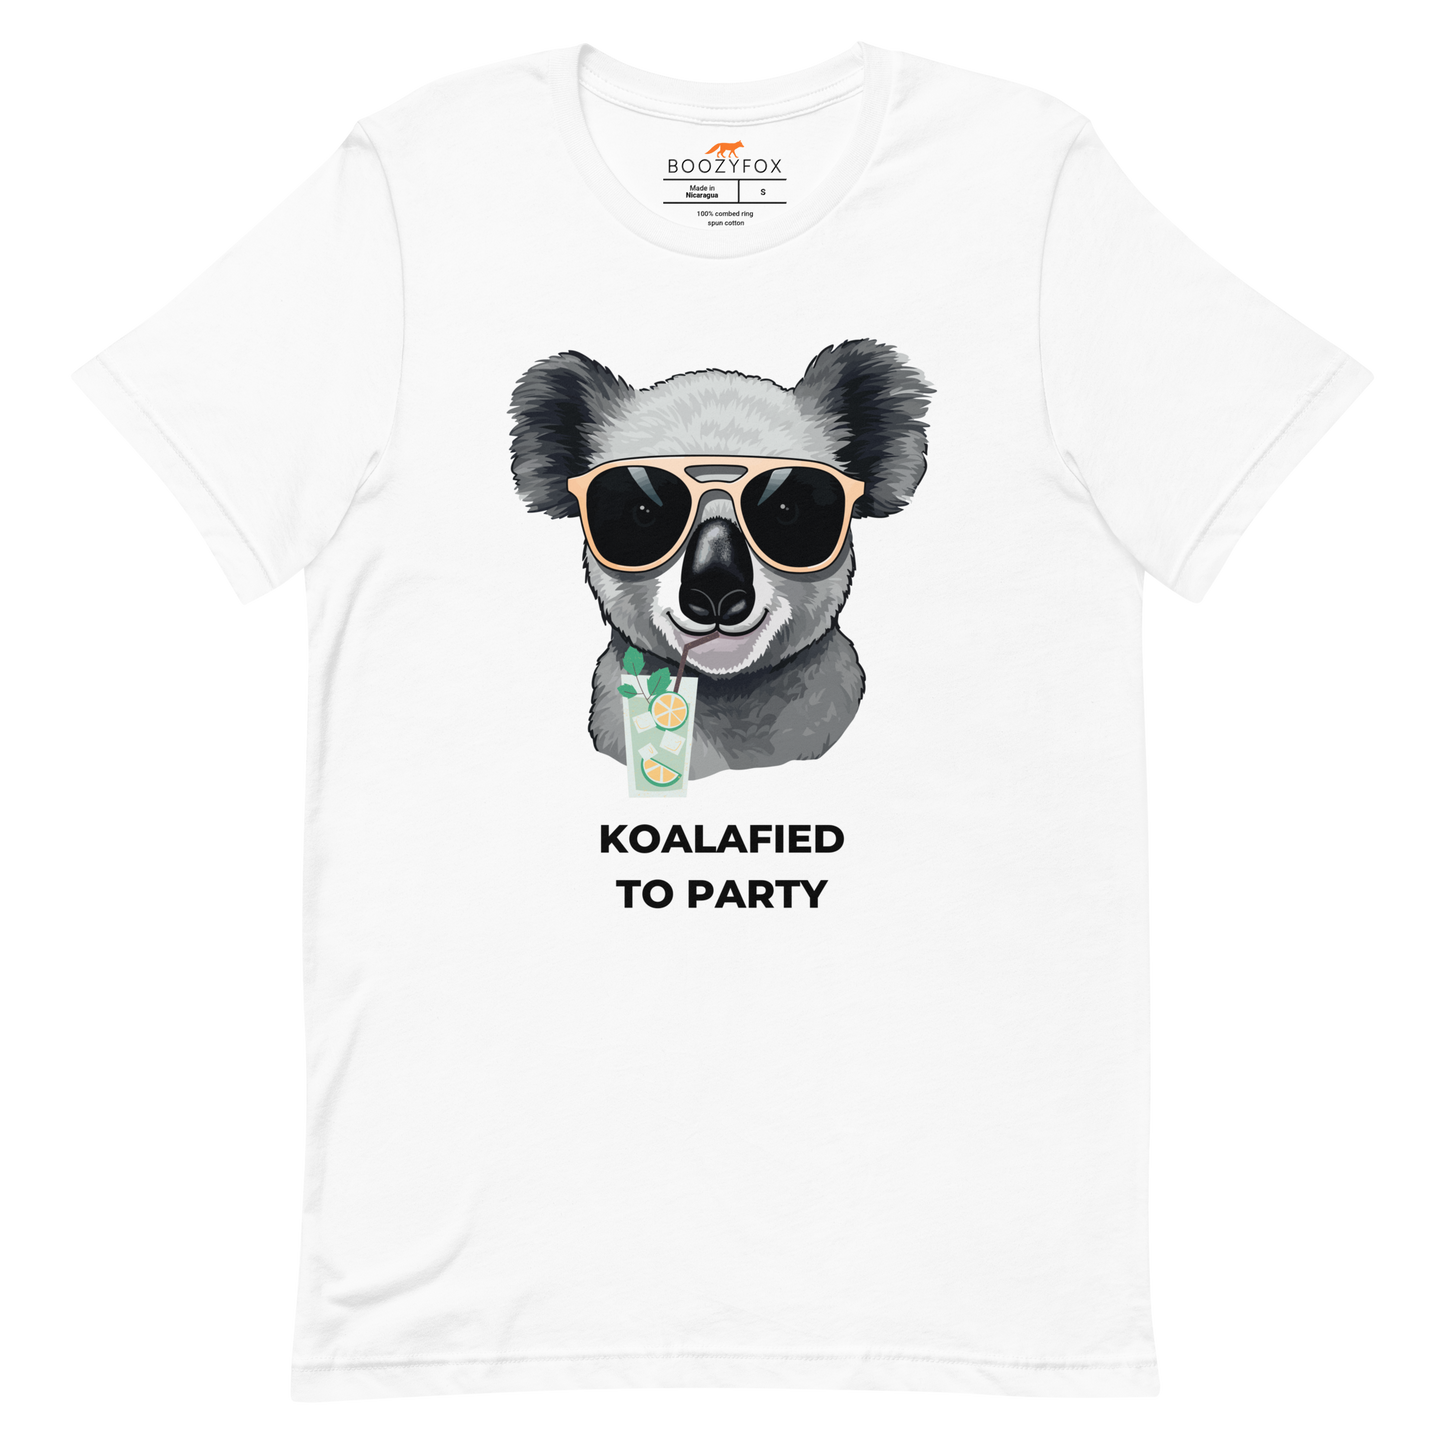 White Premium Koala Tee featuring an adorable Koalafied To Party graphic on the chest - Funny Graphic Koala Tees - Boozy Fox